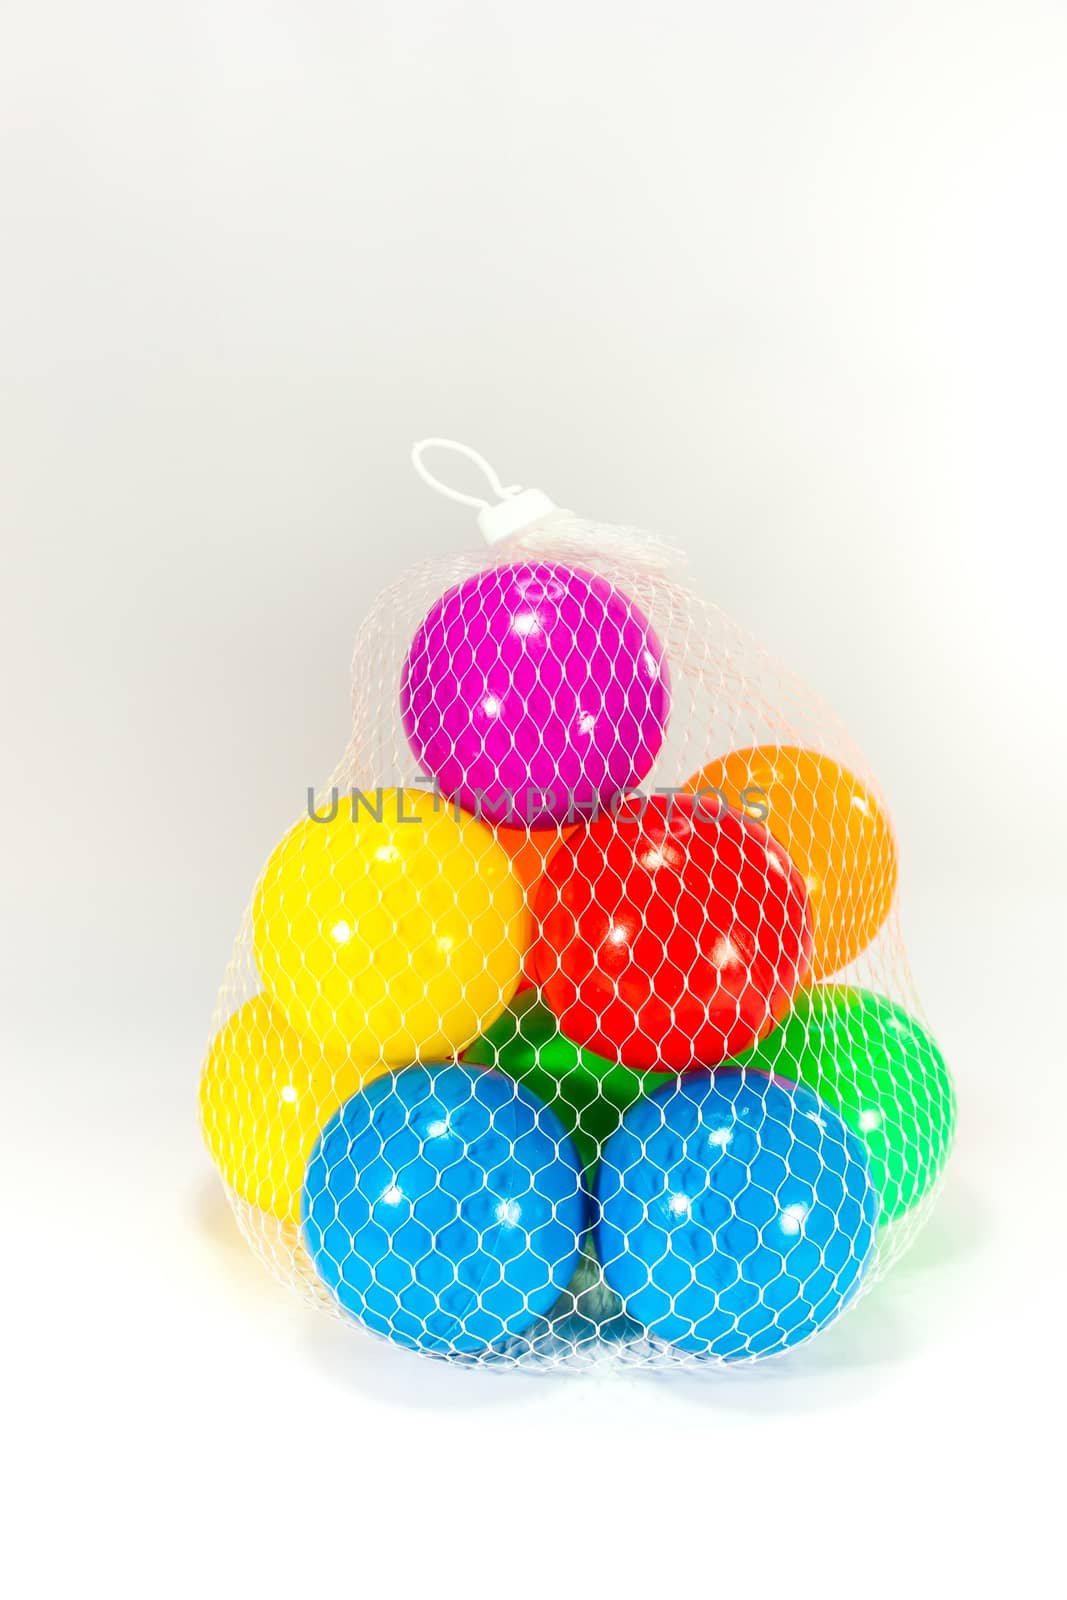 colorful plastic balls in net sac on white scene